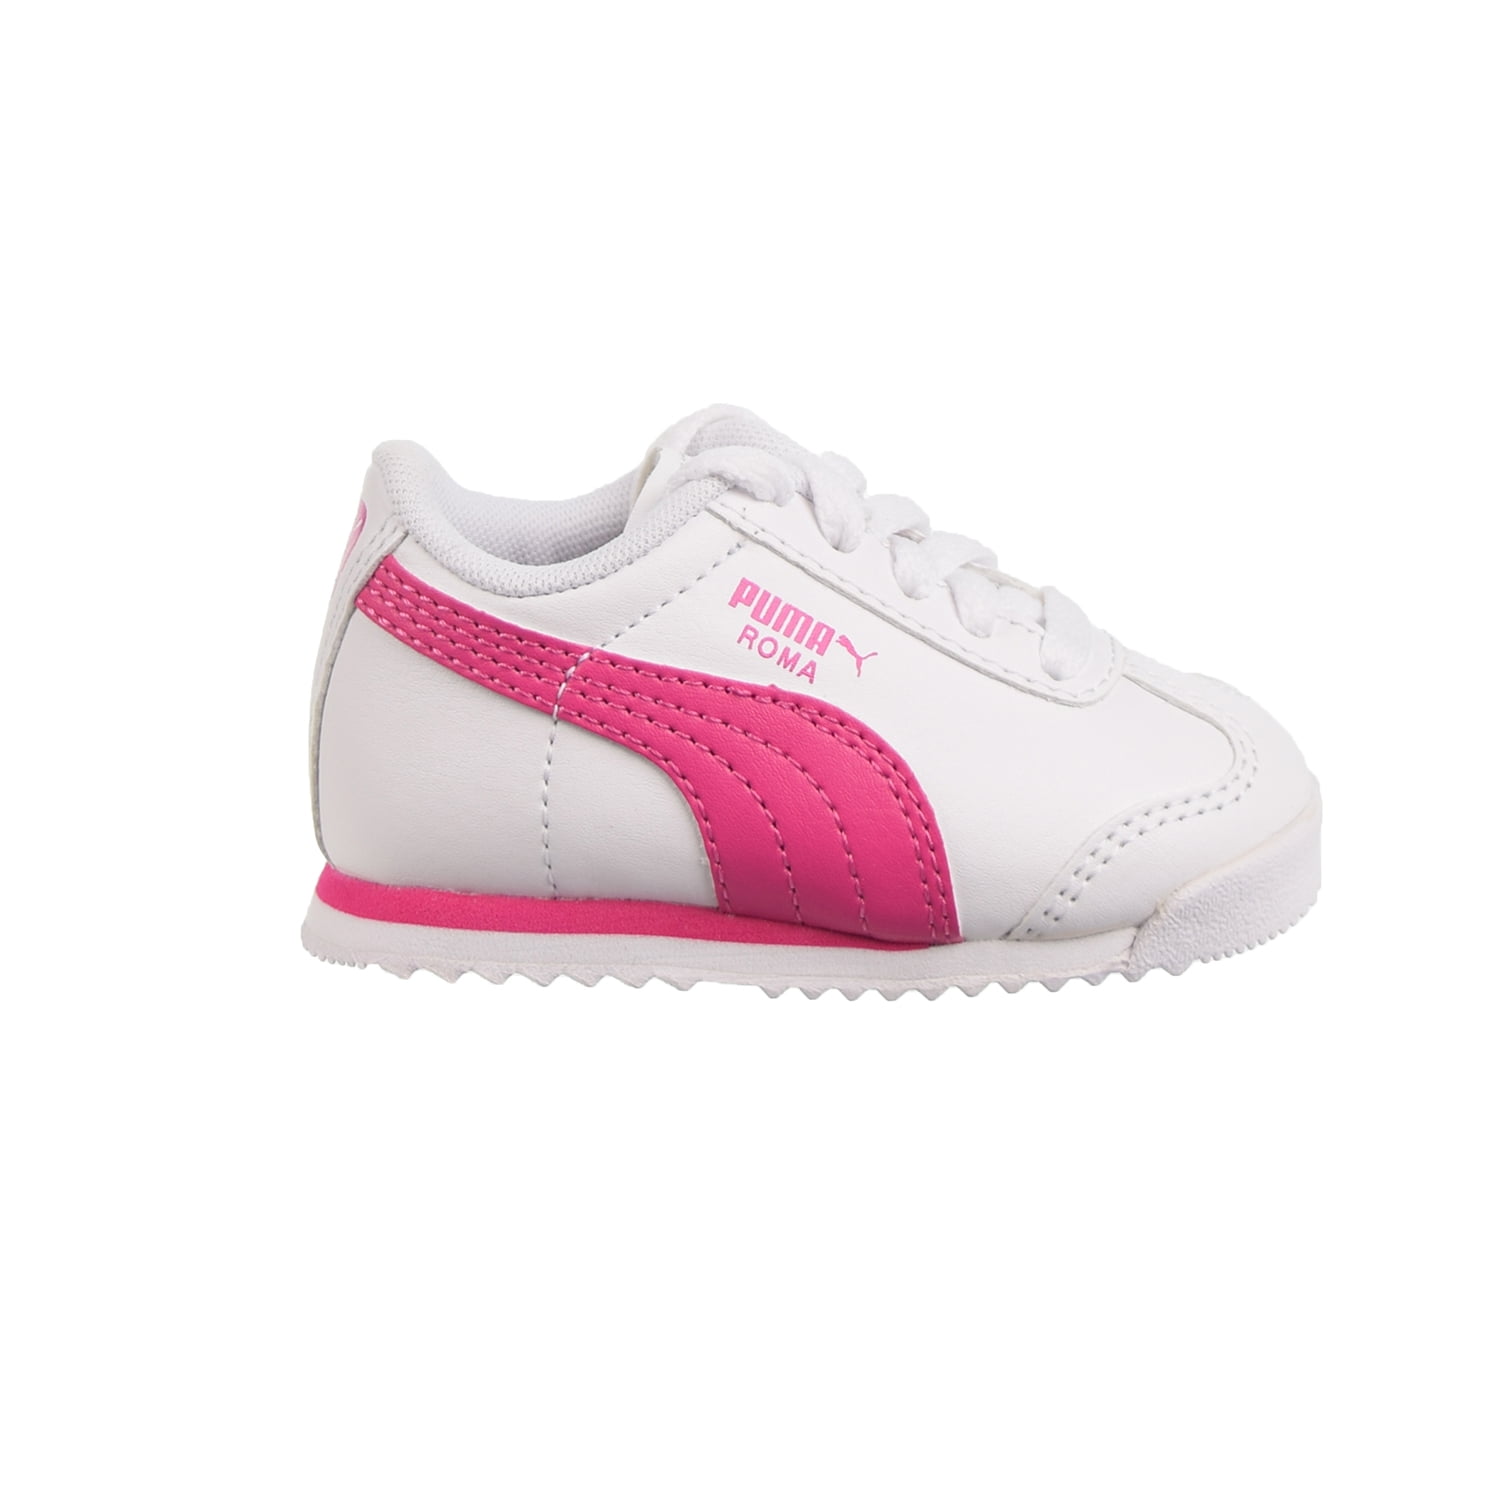 puma roma shoes pink